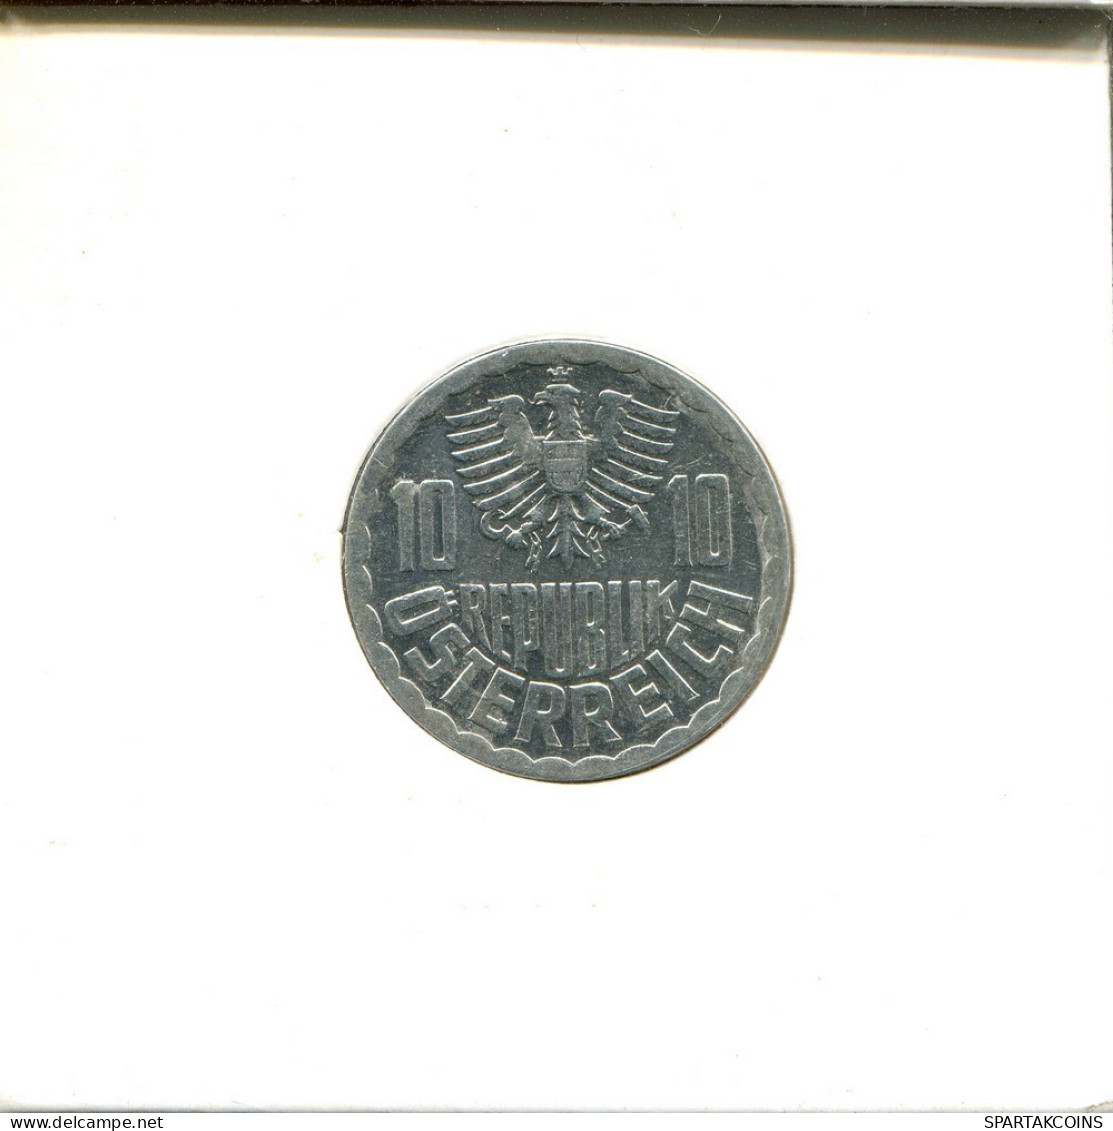 10 GROSCHEN 1990 AUSTRIA Coin #AT570.U.A - Austria